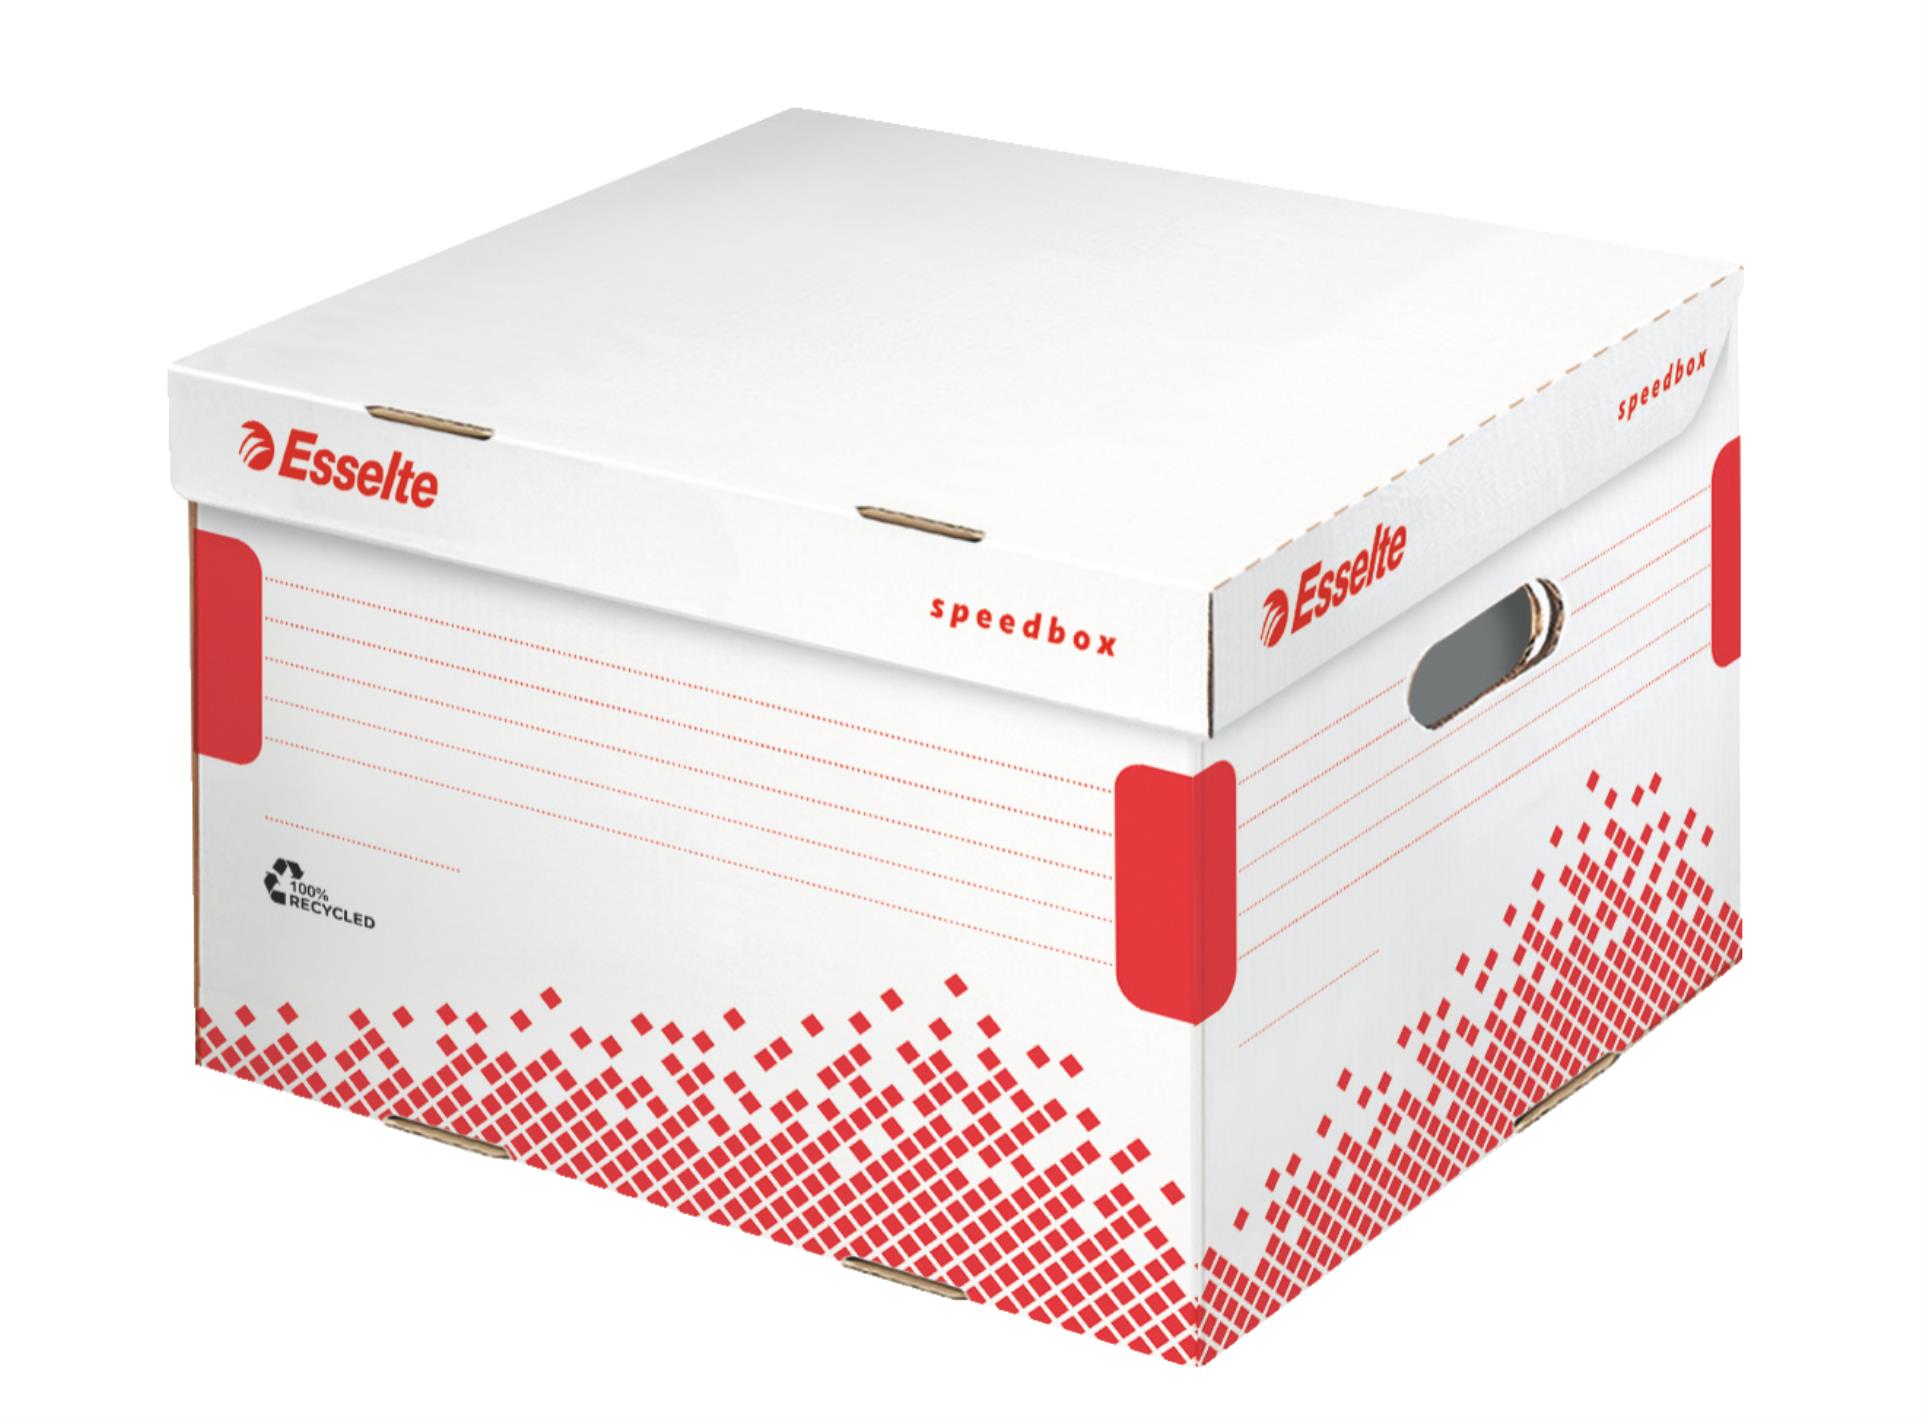 Archivační kontejner Esselte Speedbox - velikost M